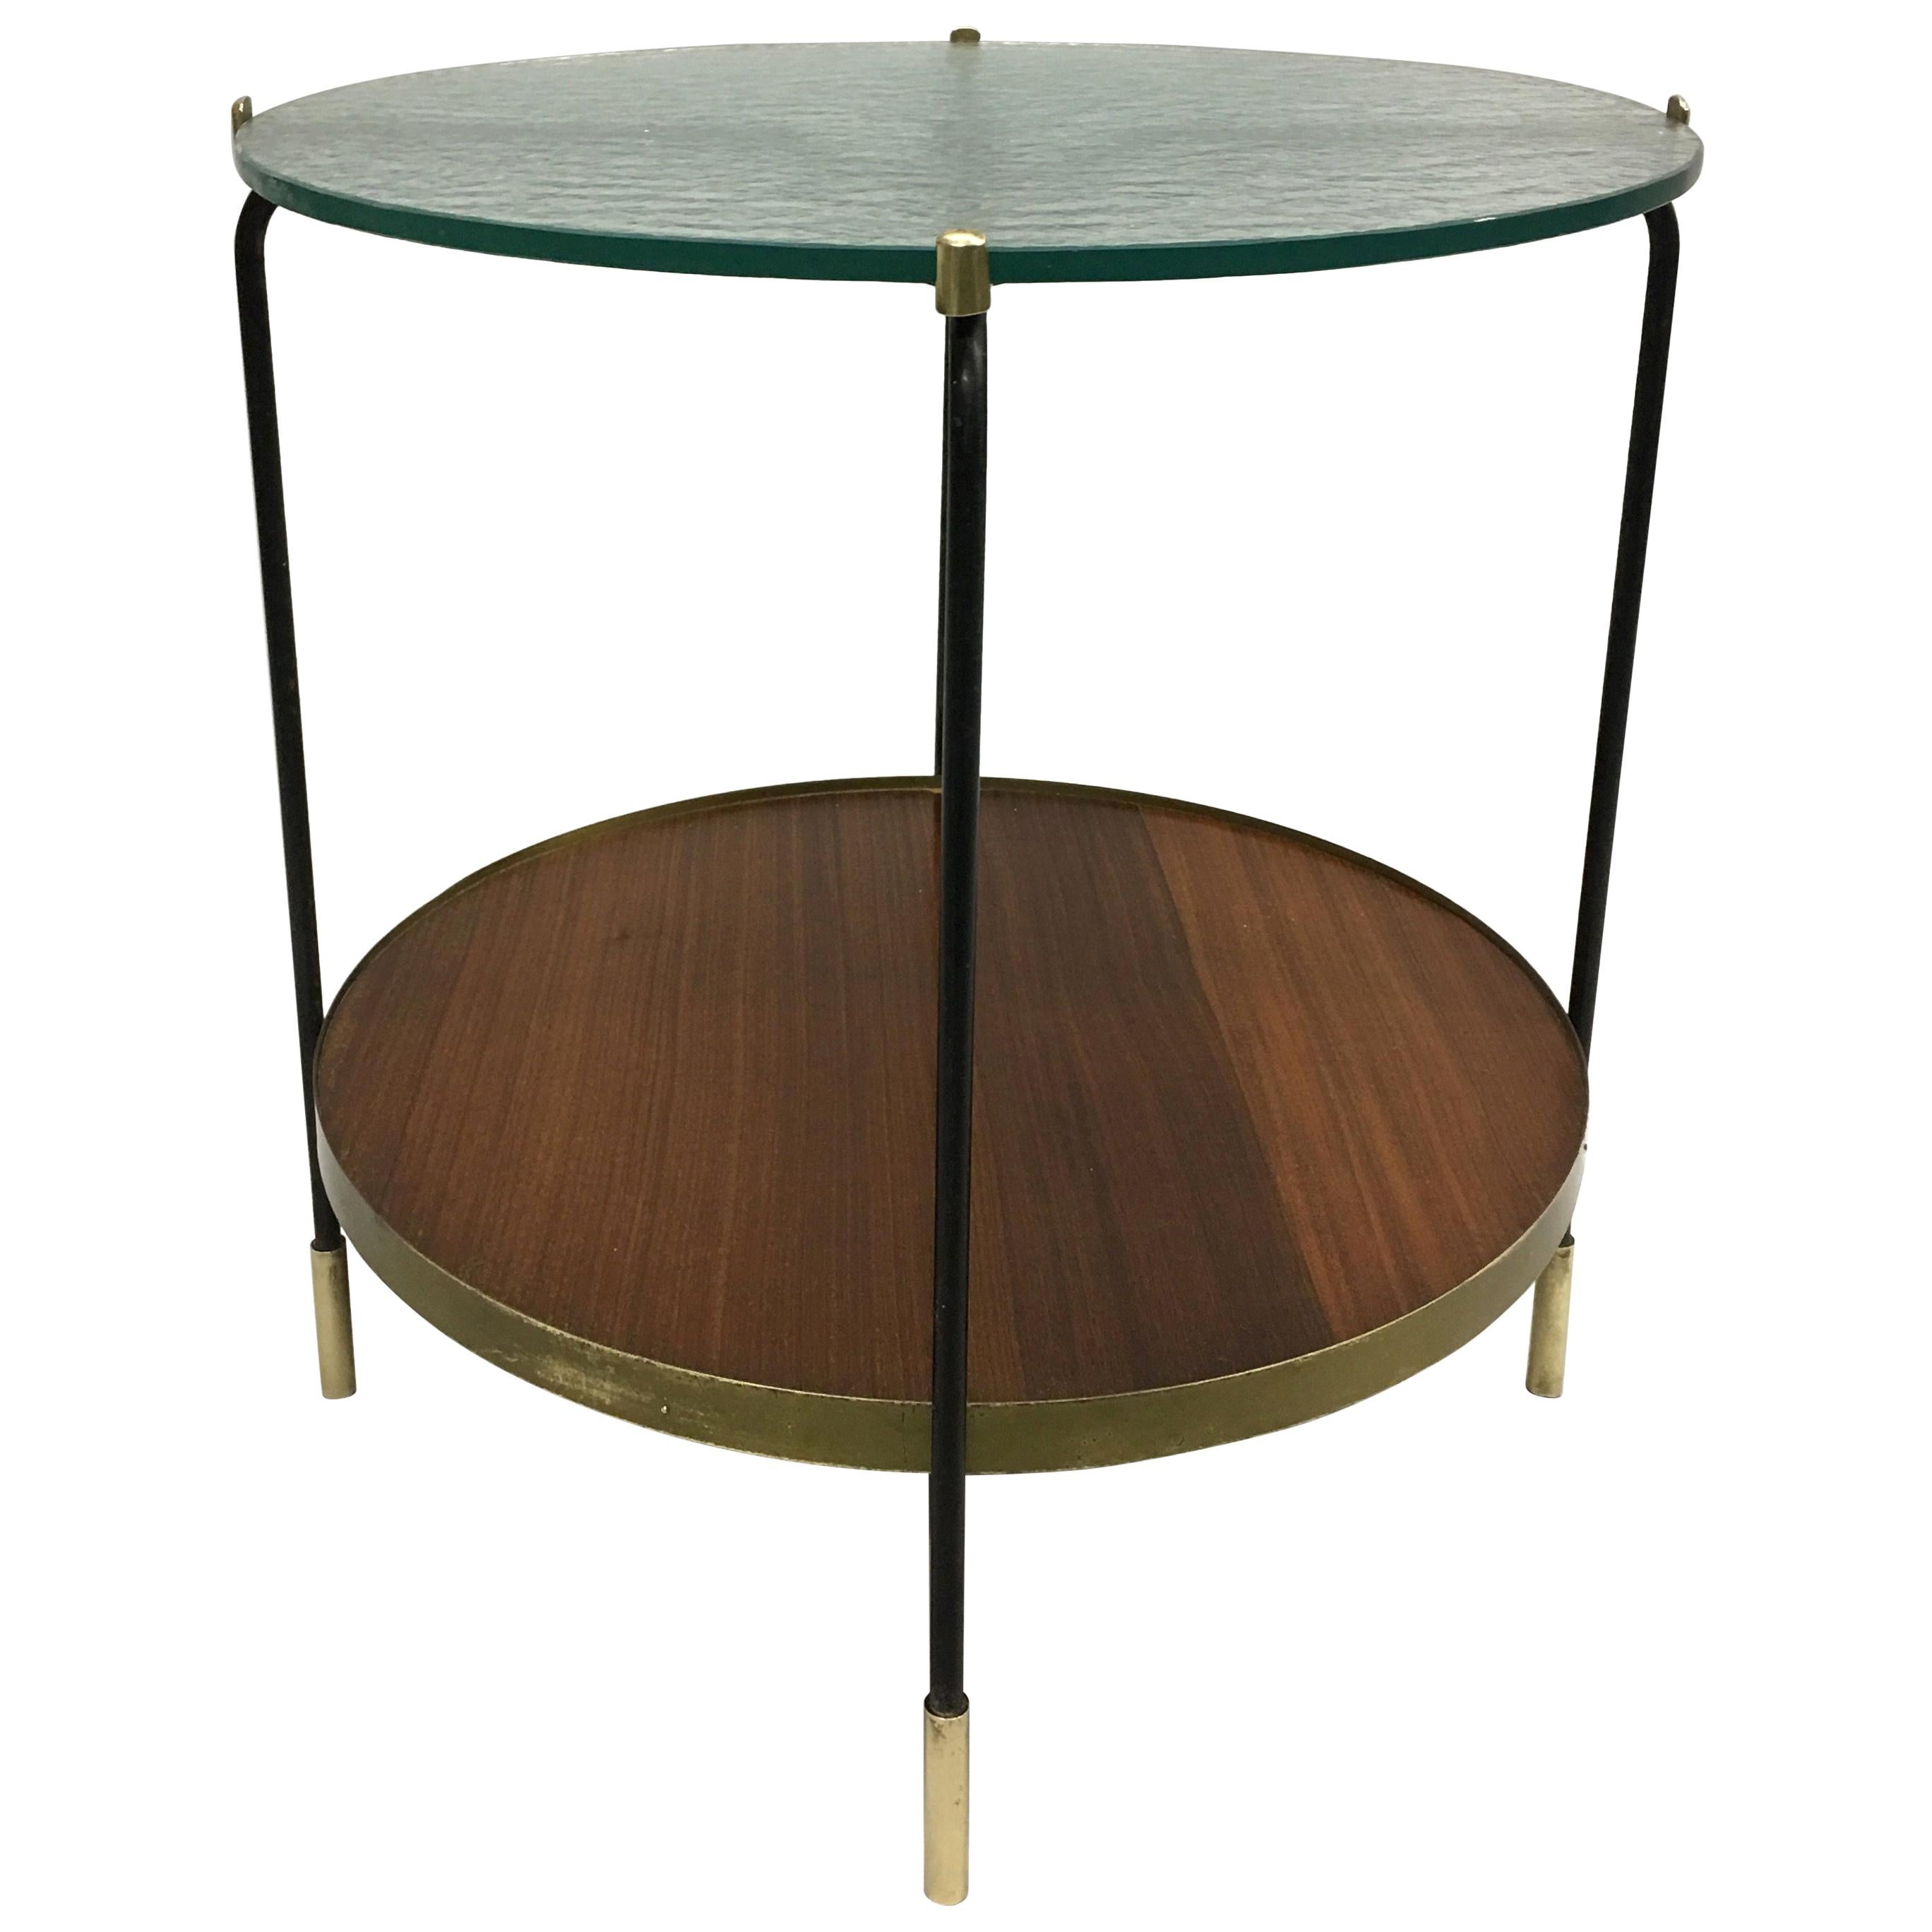 Italian Midcentury Double Tier Bar/ Side/ Coffee Table in Style of Fontana Arte